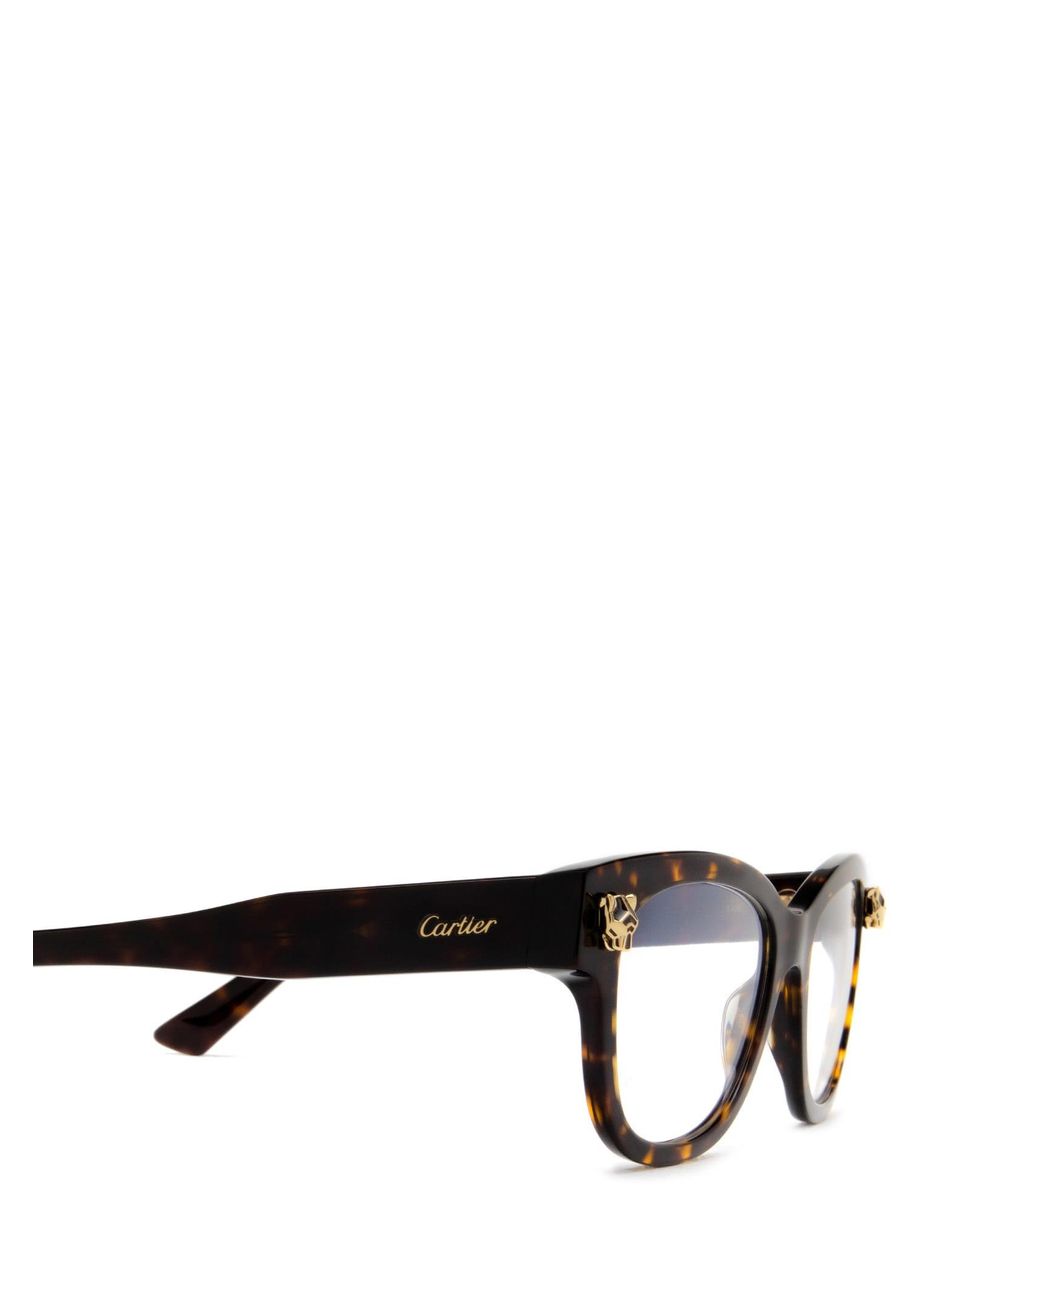 CARTIER CT0267S Panthère de Cartier round-frame metal and acetate sunglasses  | Cartier sunglasses, Sunglasses accessories, Sunglasses